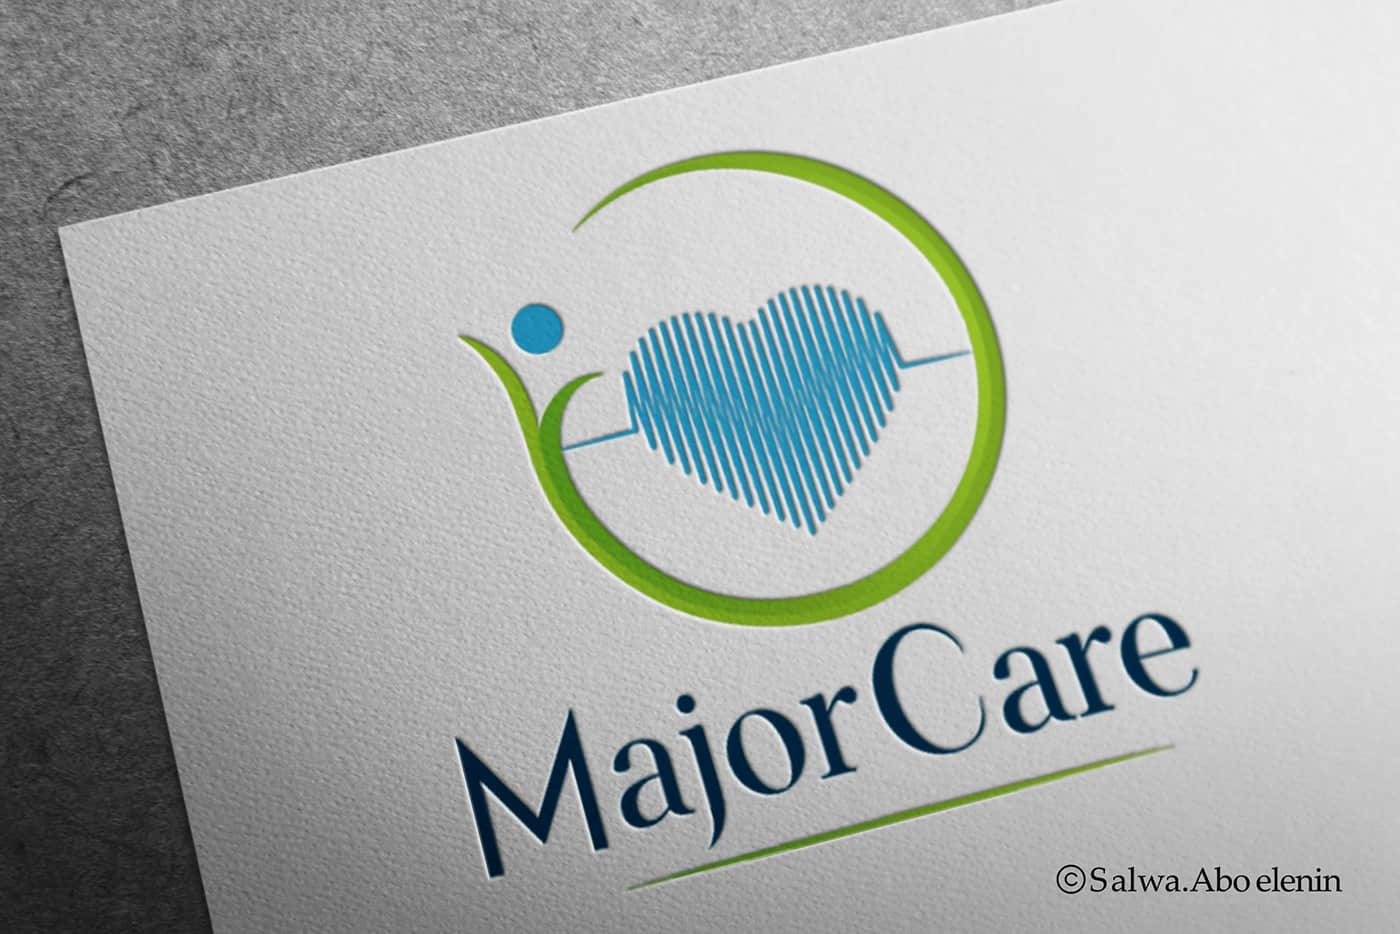 Major Care (Cardiovascular Valves Supplies Company) Identity